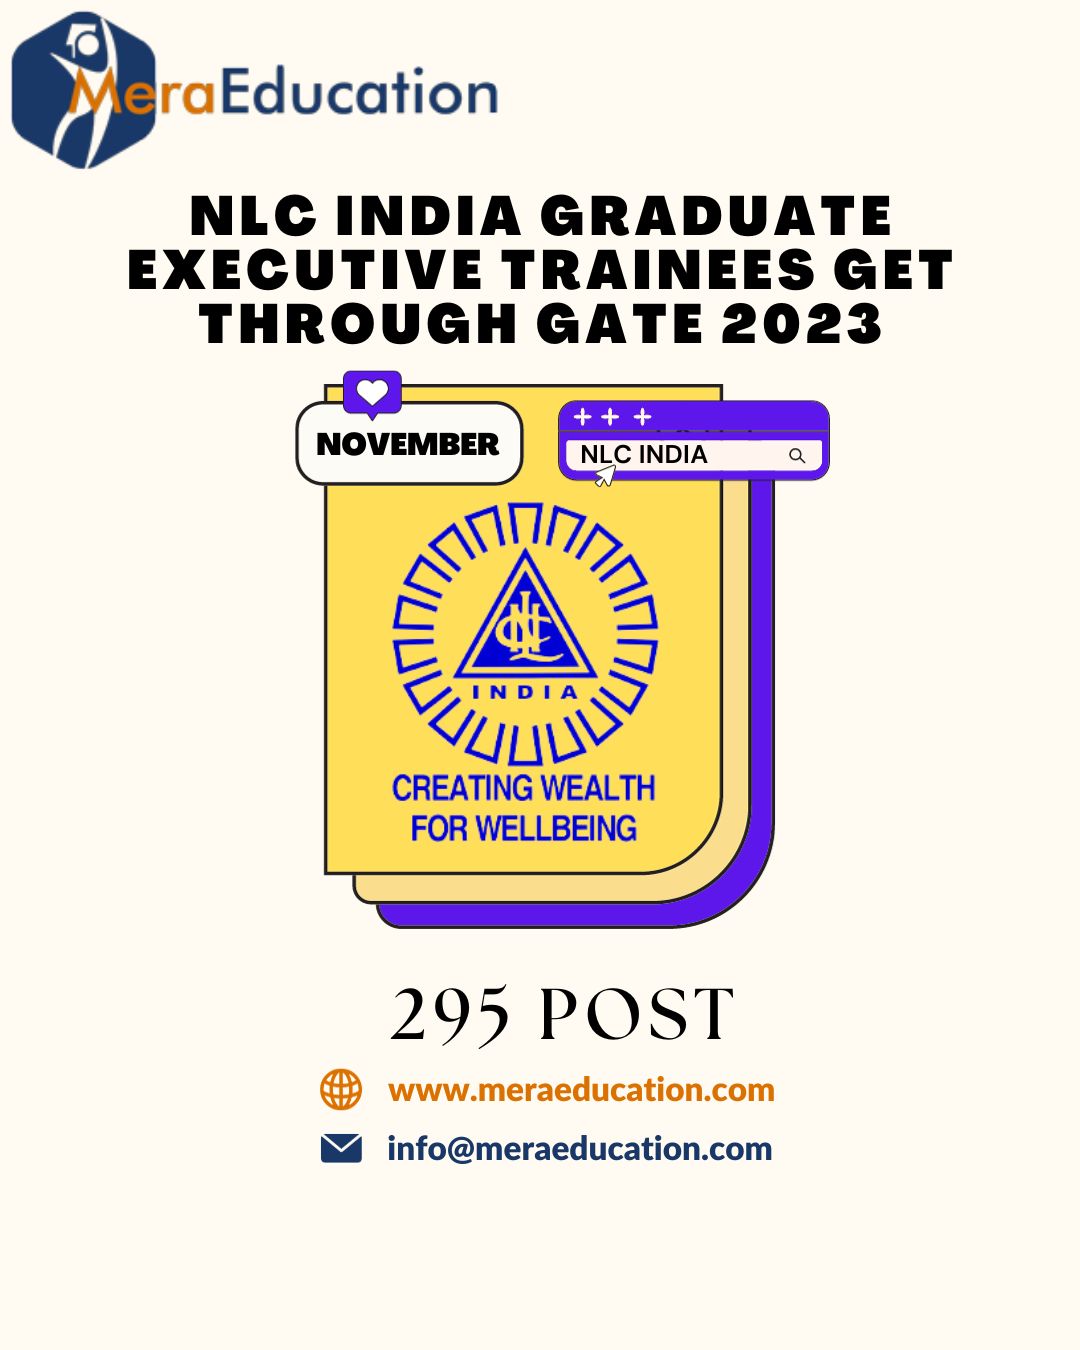 NLC India Graduate Executive Trainees GET Through GATE 2023